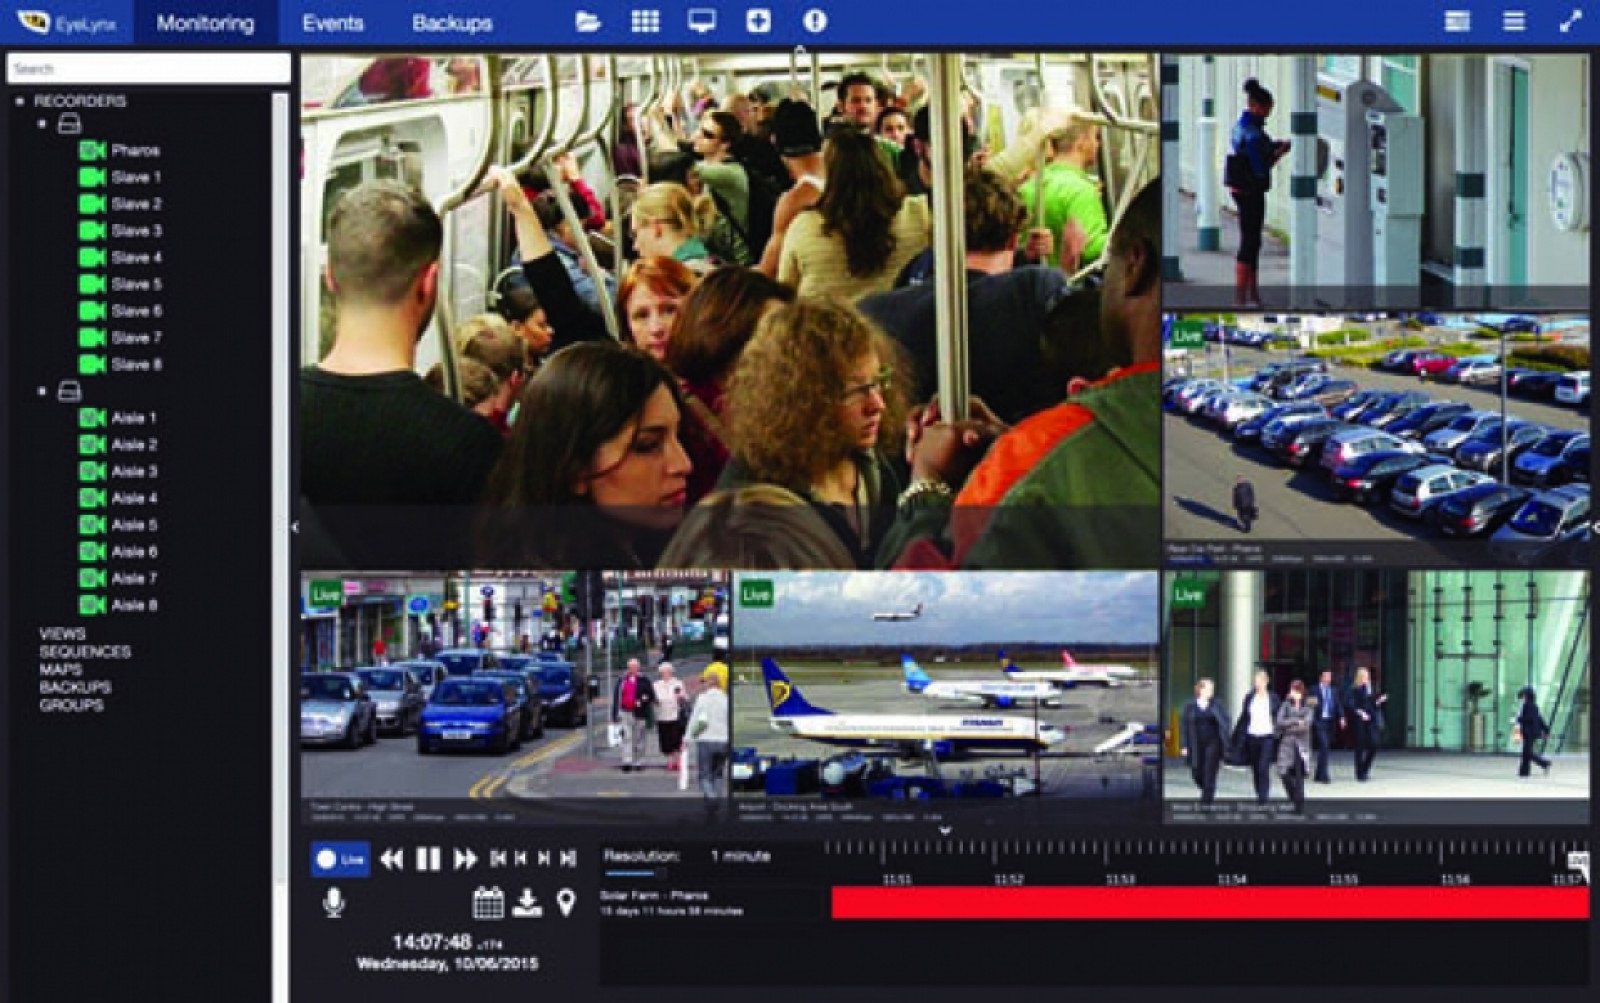 Smart video surveiliance enhances passenger safety...